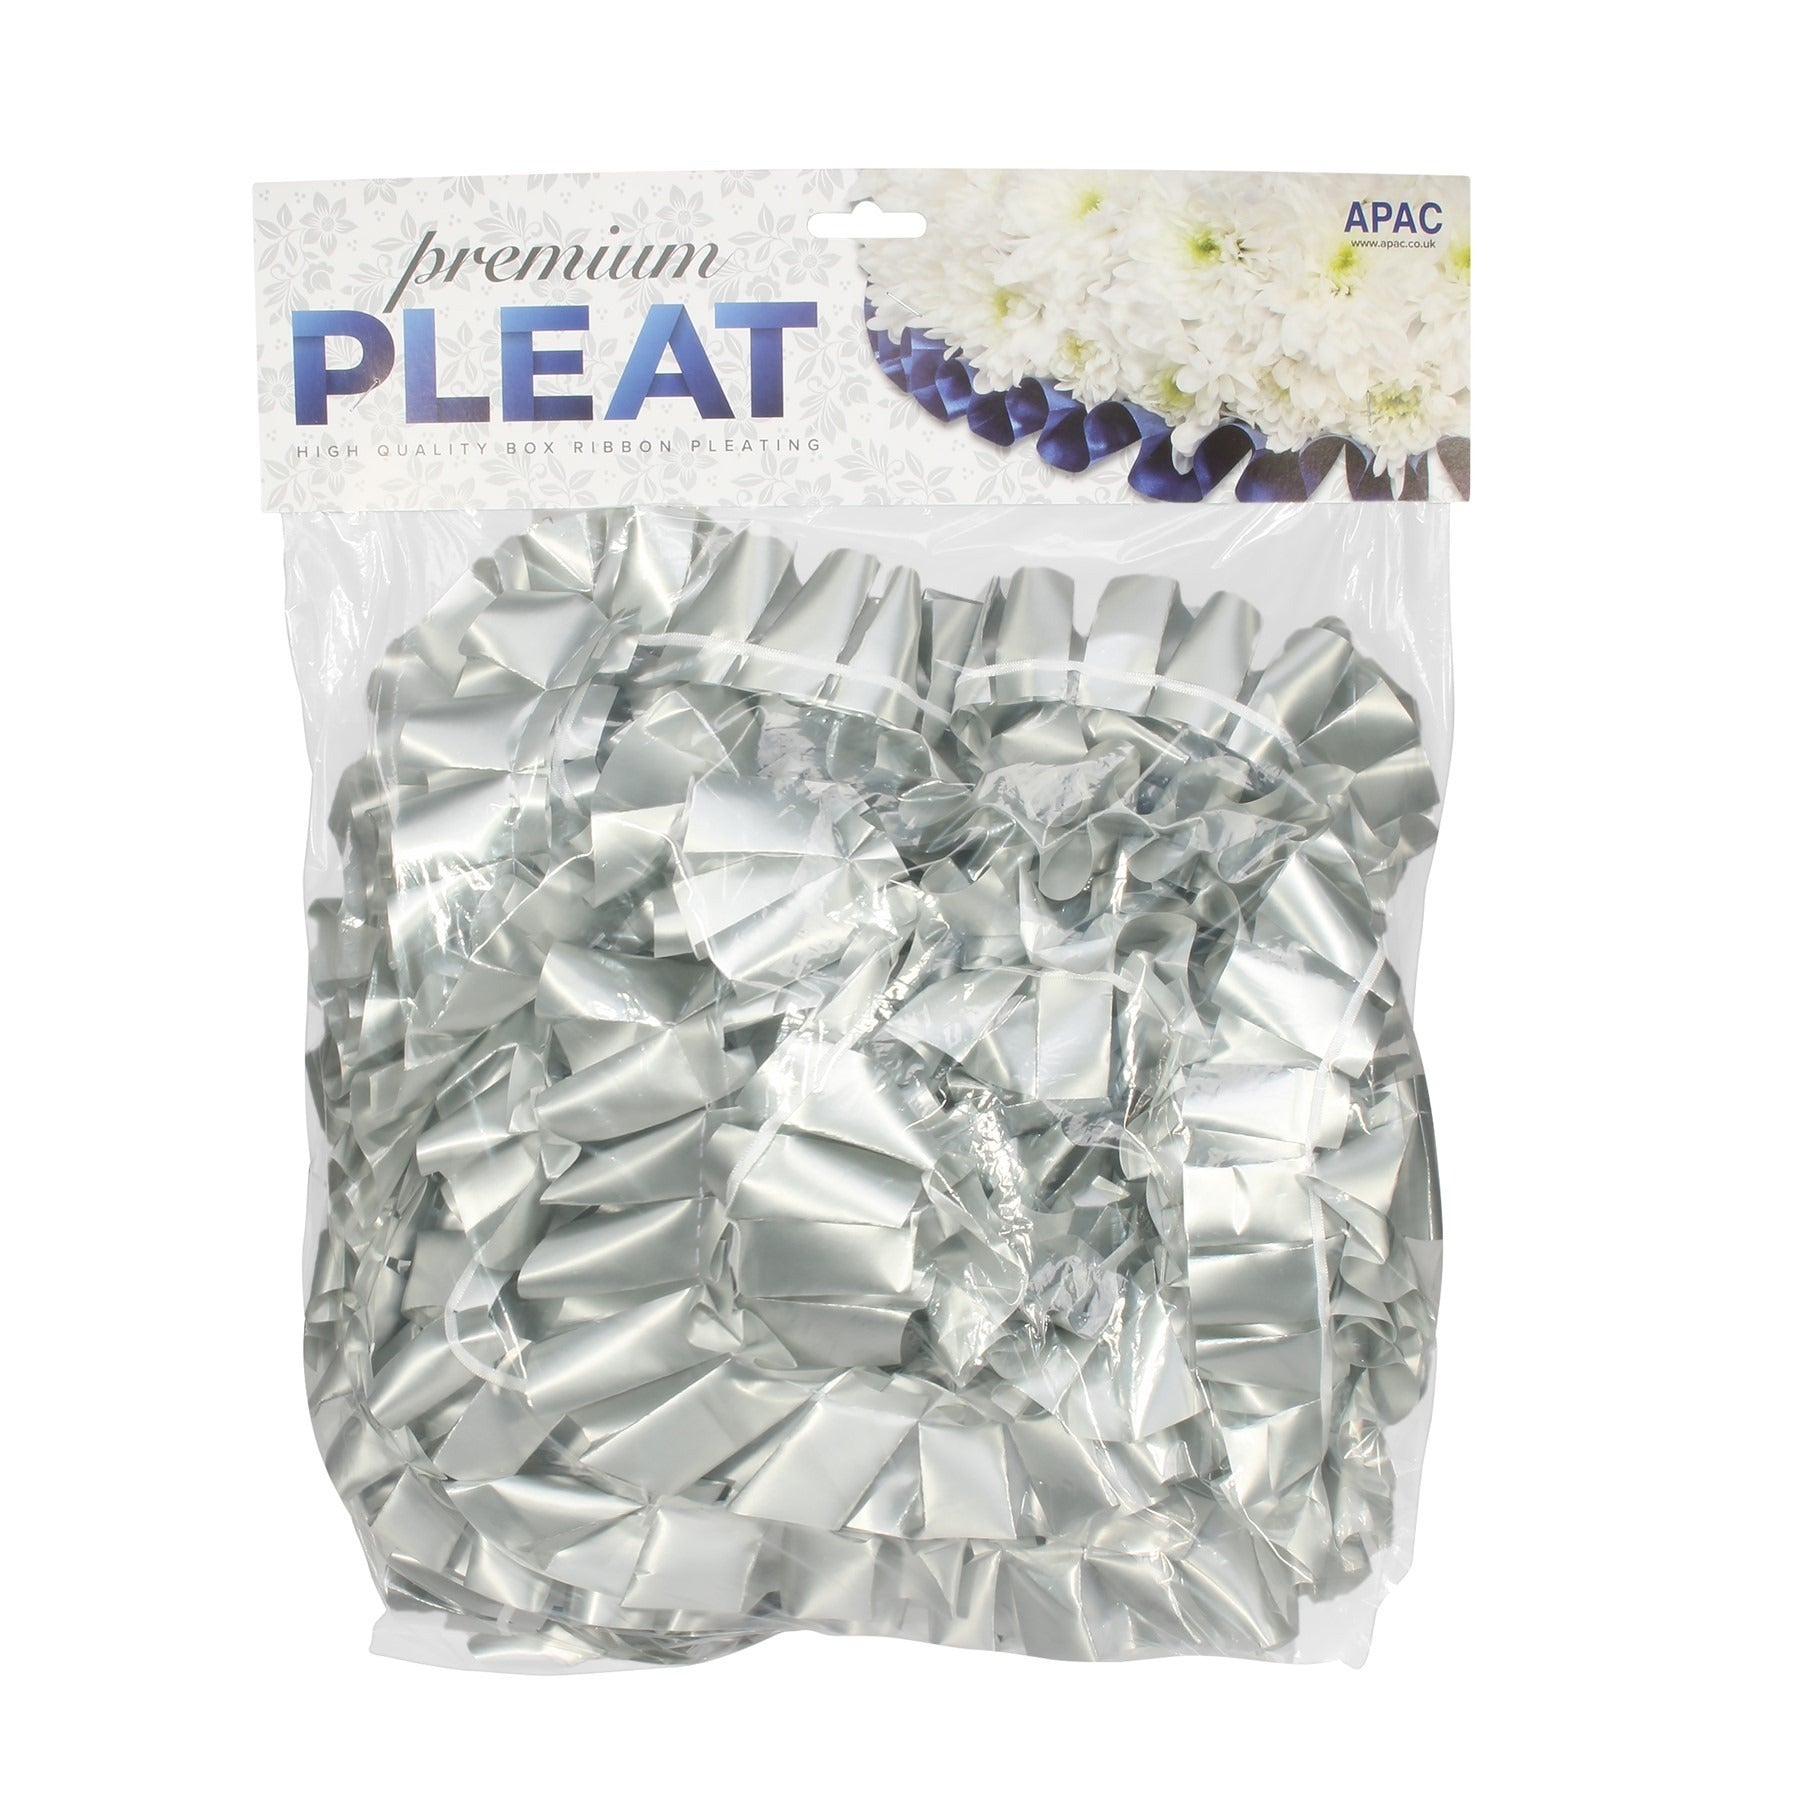 View Premium Silver Pleat Ribbon 50mm x 10m information